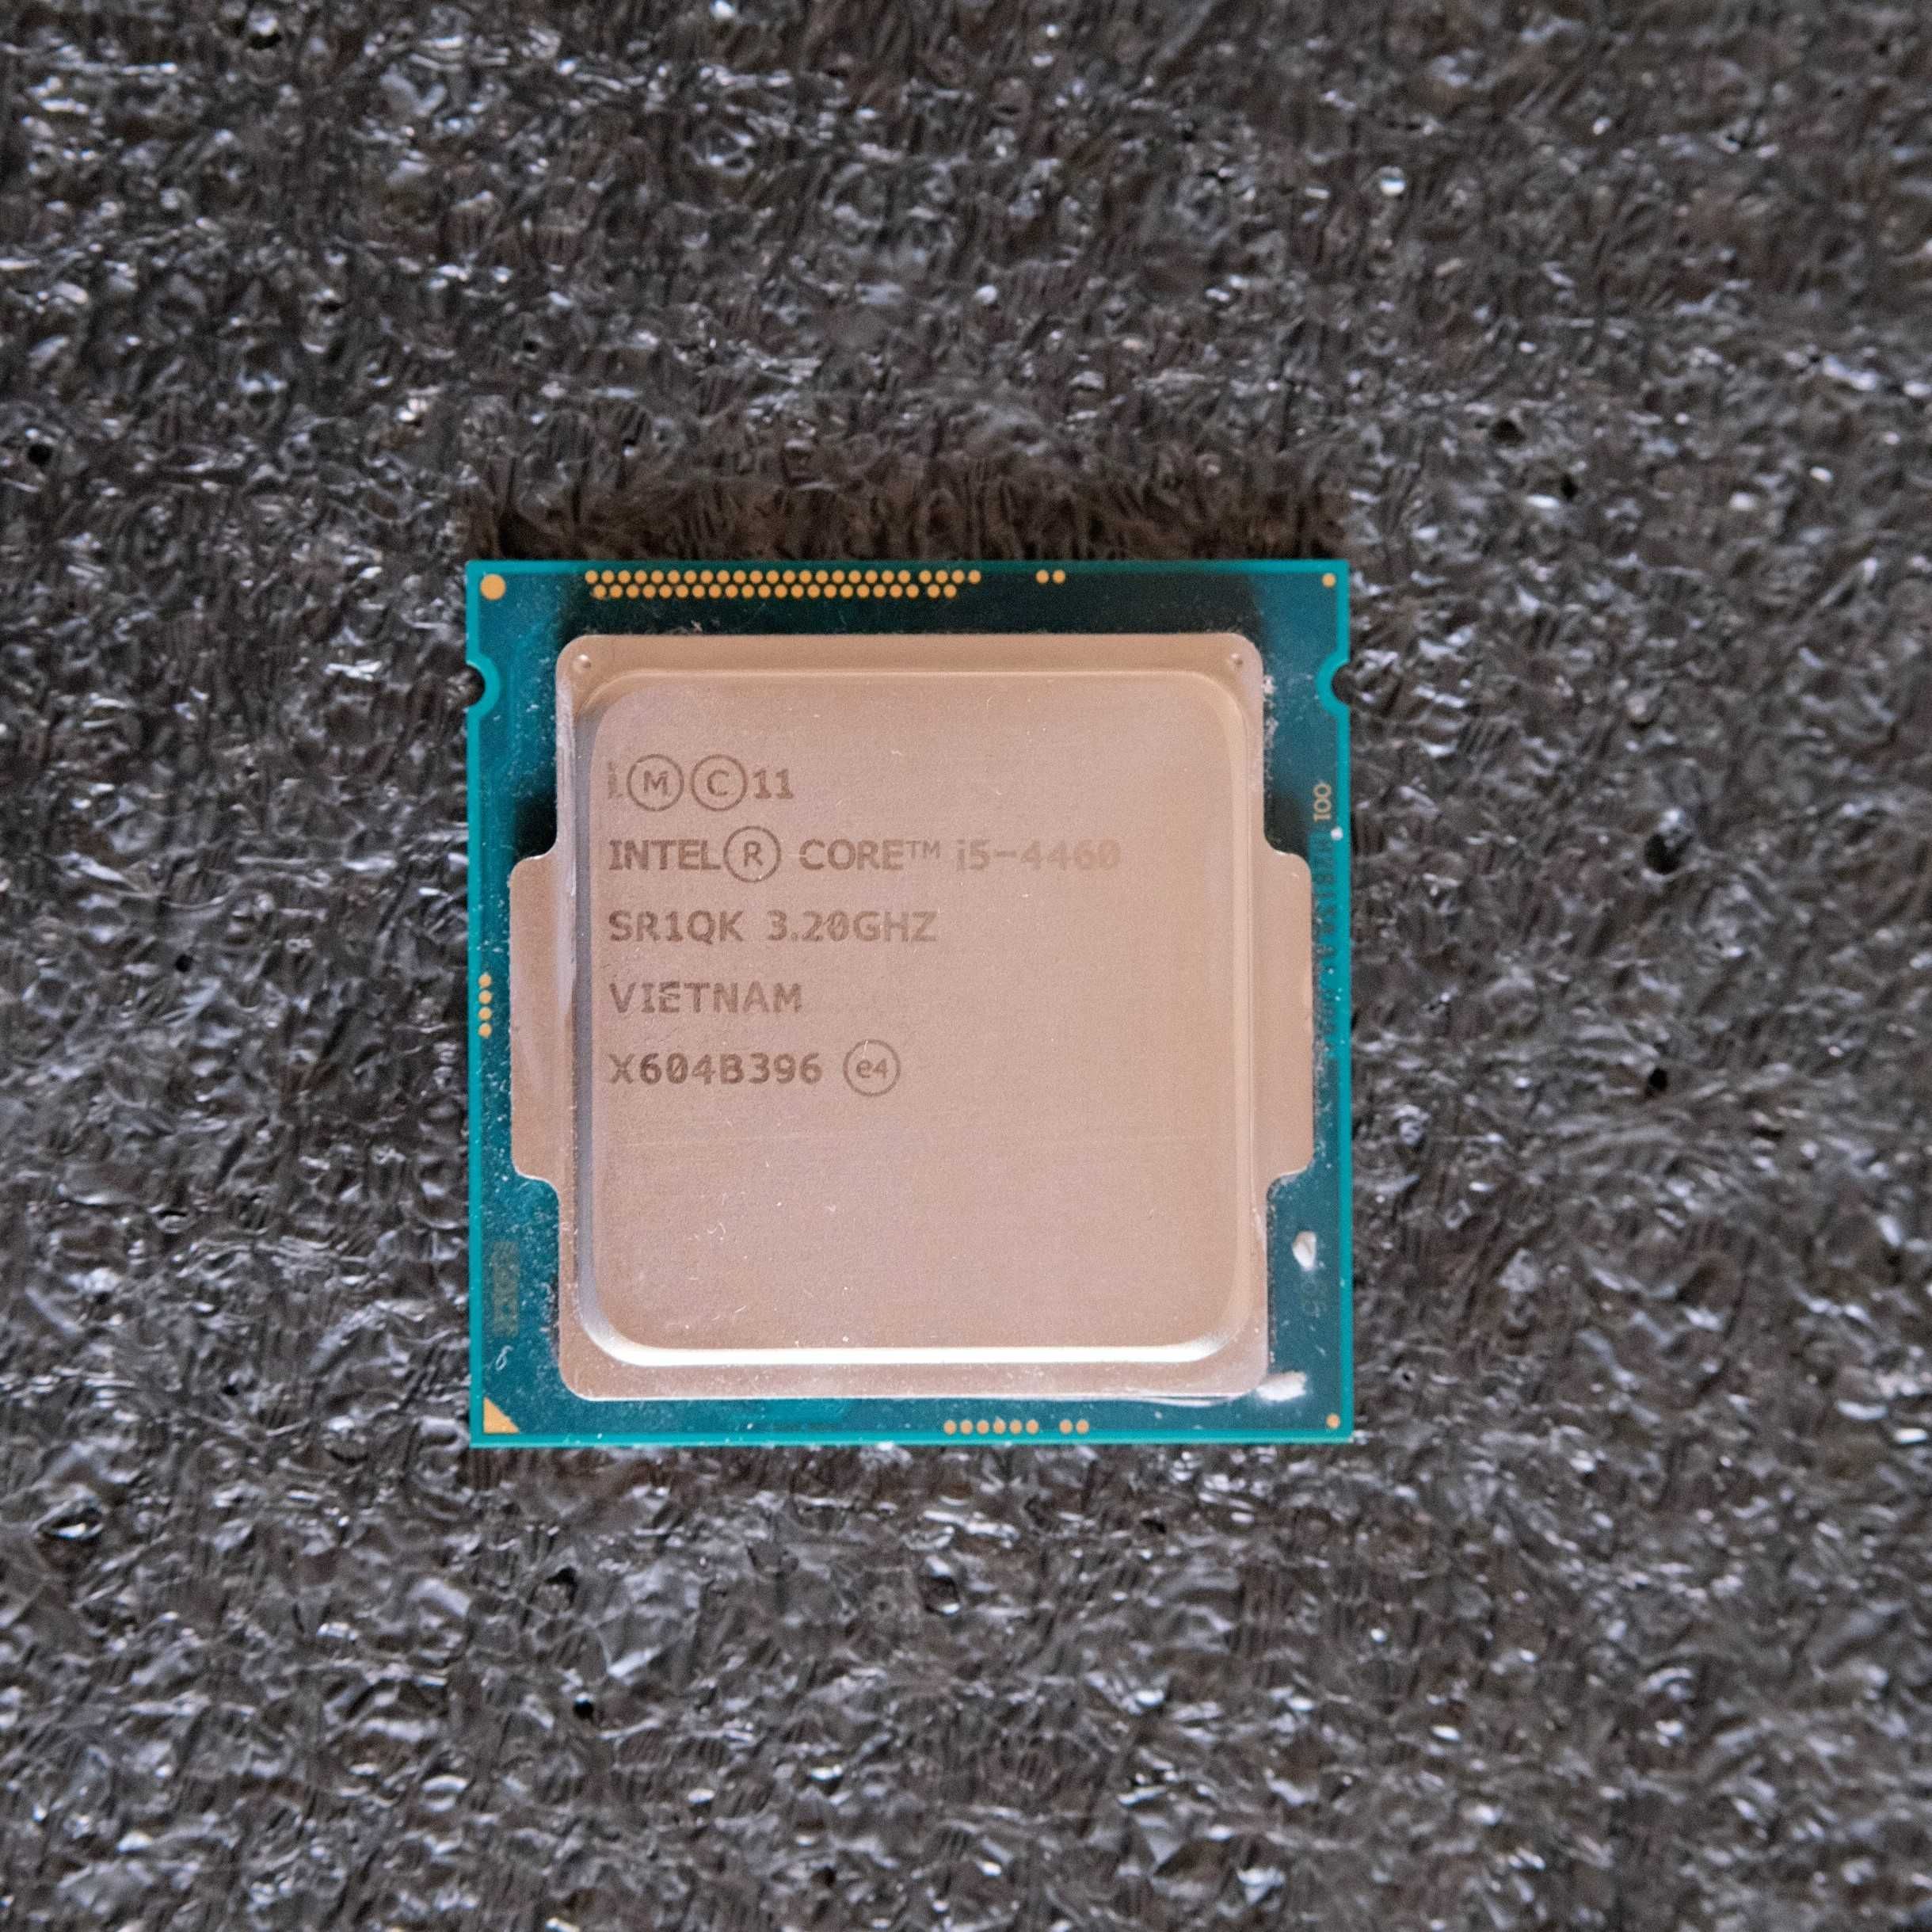 Intel core i5-4460